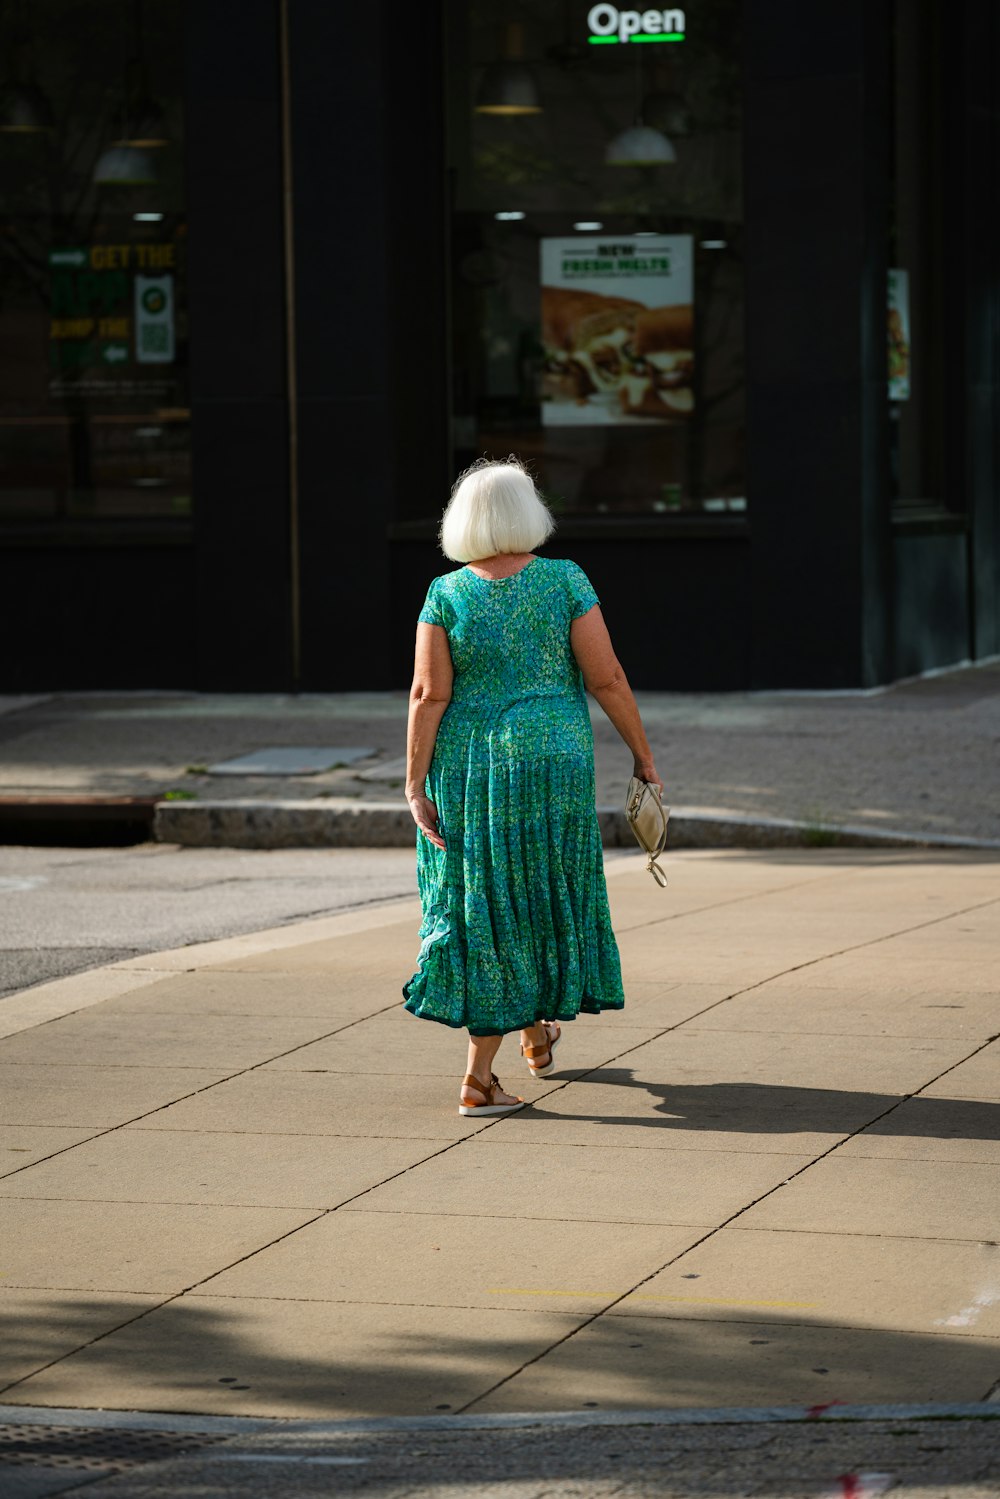 a woman in a green dress walking down the street